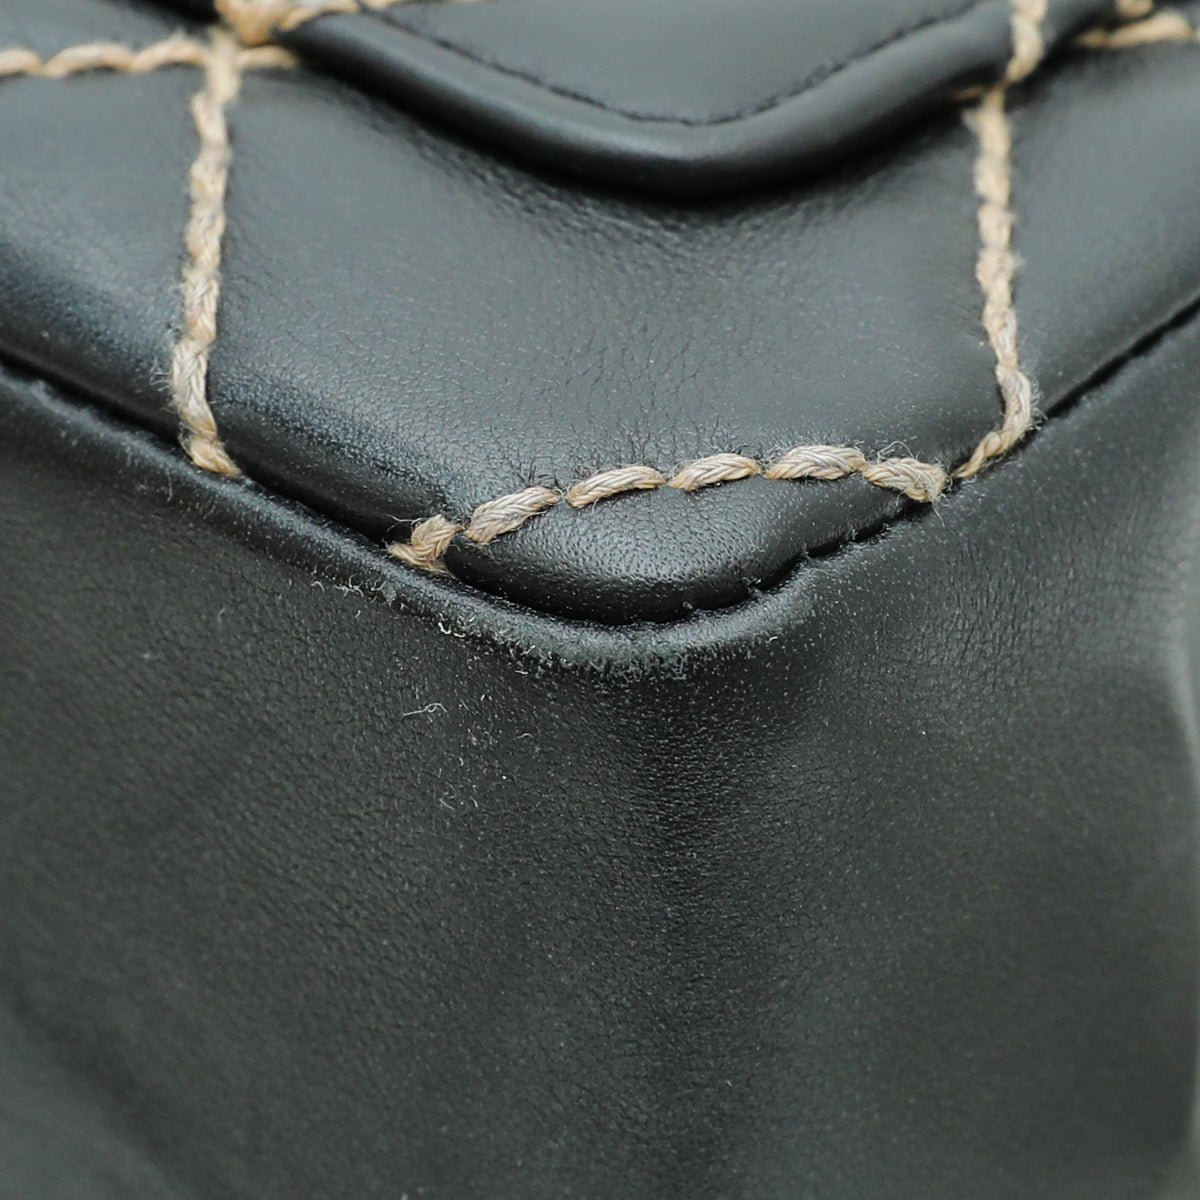 Chanel Black Wild Stitch Flap Bag